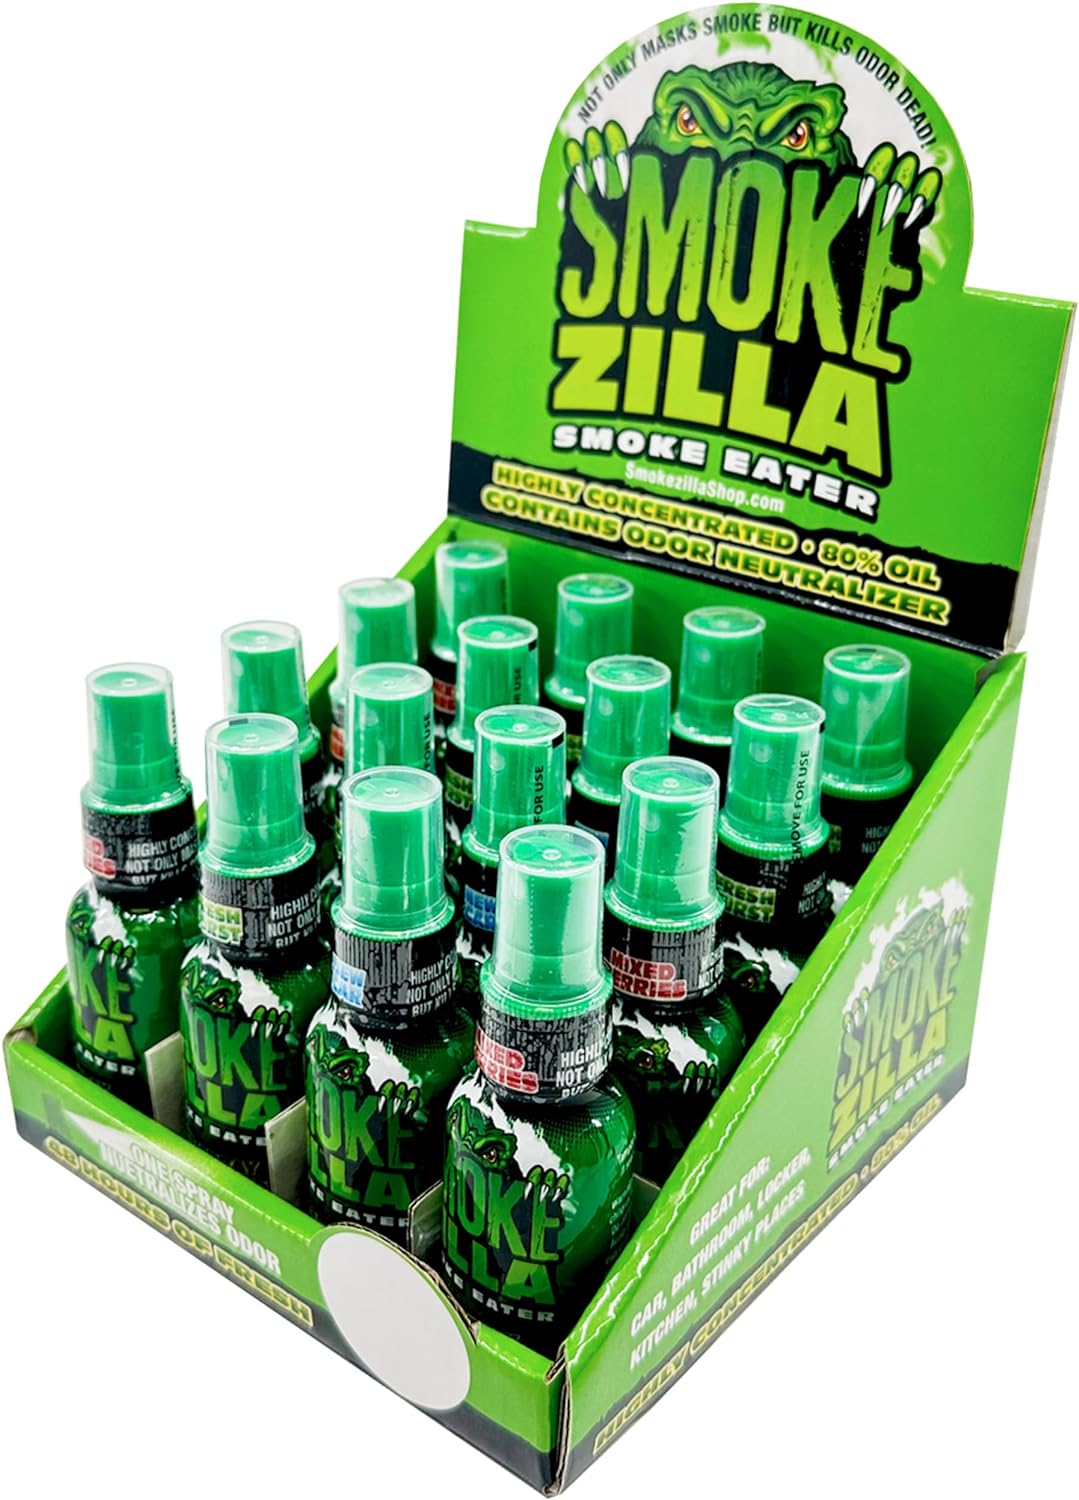 Air Freshener Spray - Multi-Use Smoke Odor Eliminator Spray for Car, Office, Kitchen, Bedroom, Bathroom, Locker - 30ml Concentrated Oil Blend Mist - Smoke Odor Exterminator by Smokezilla, 16-Pack